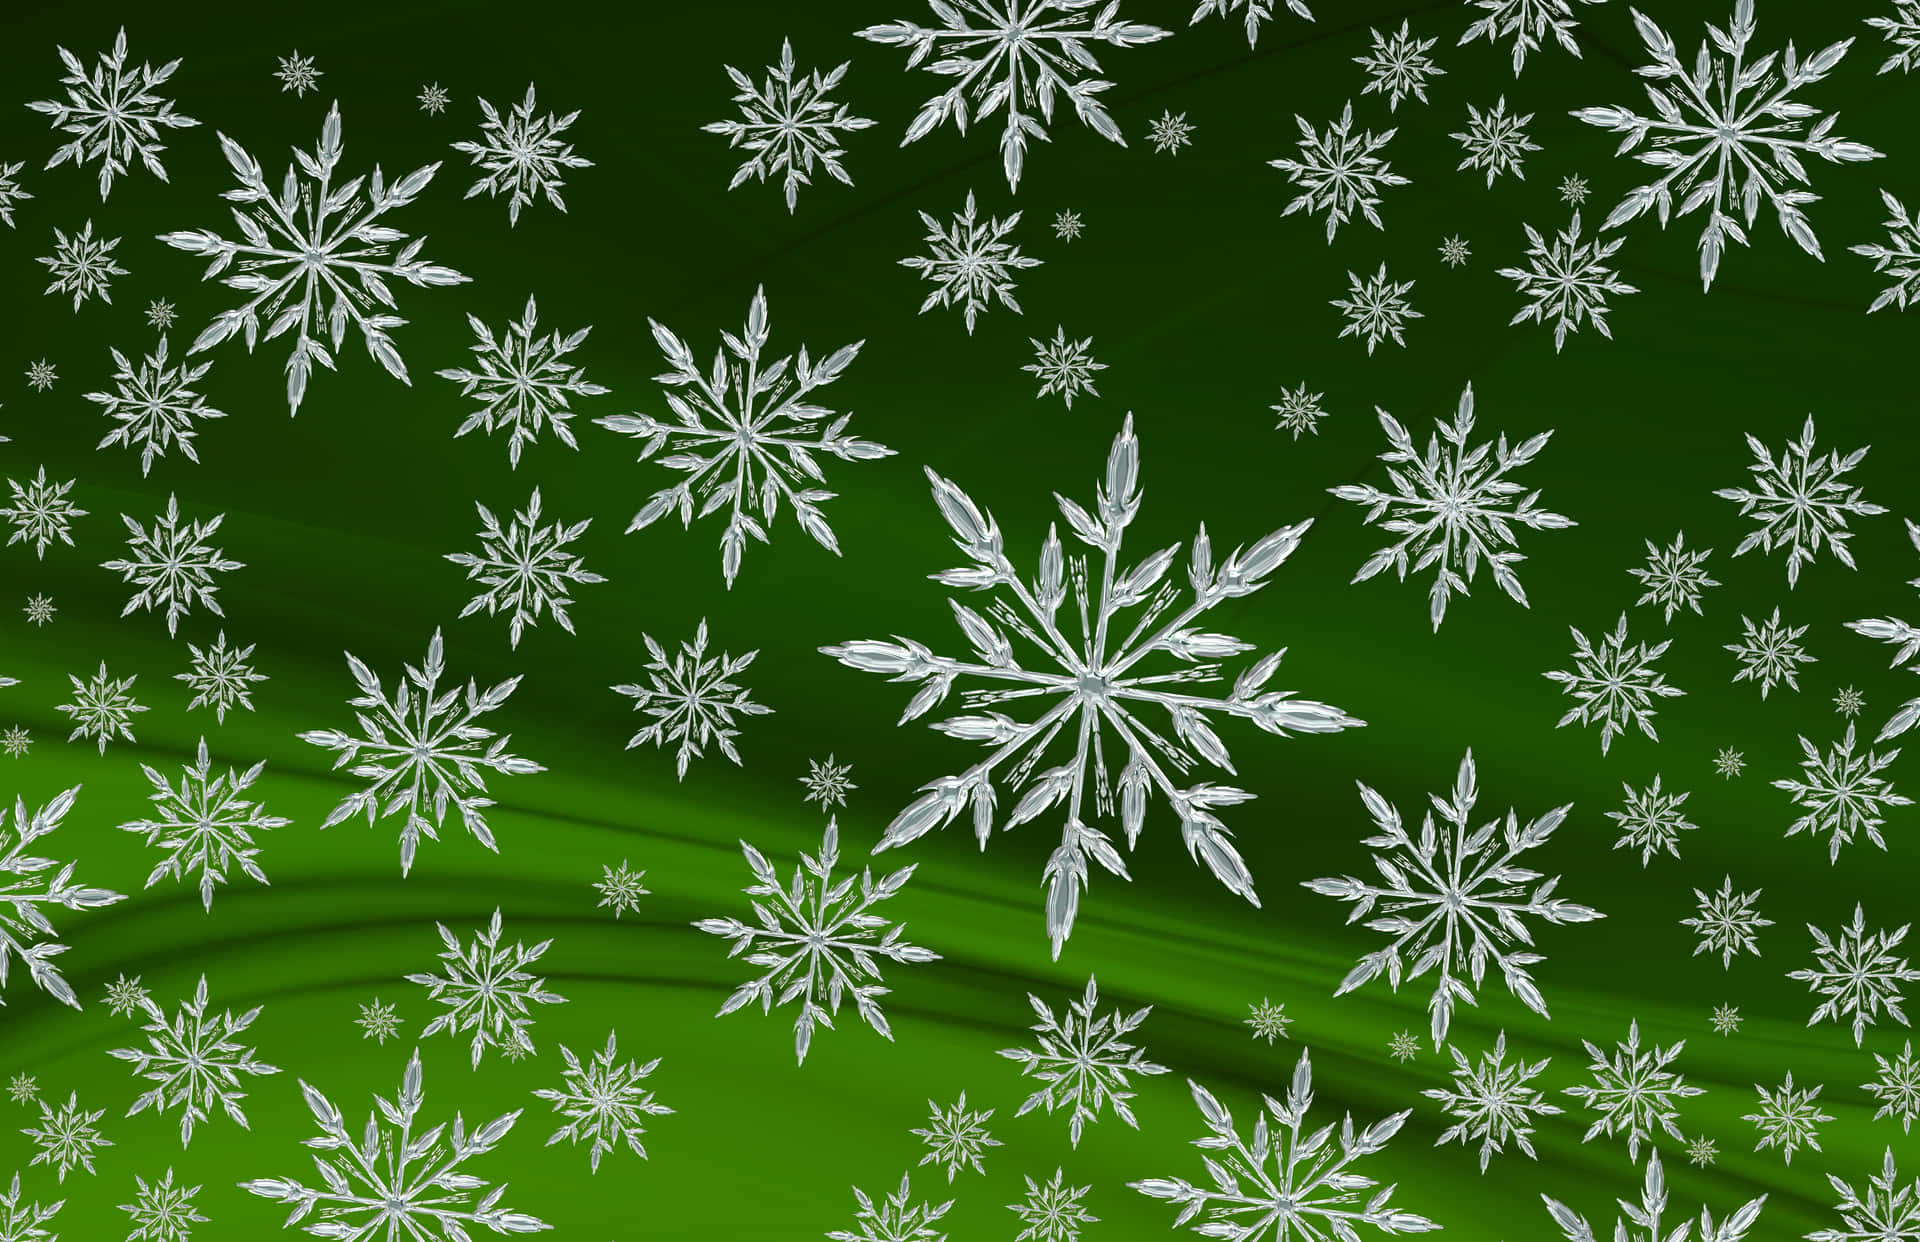 Uniquely shaped snowflakes create a beautiful winter scene.